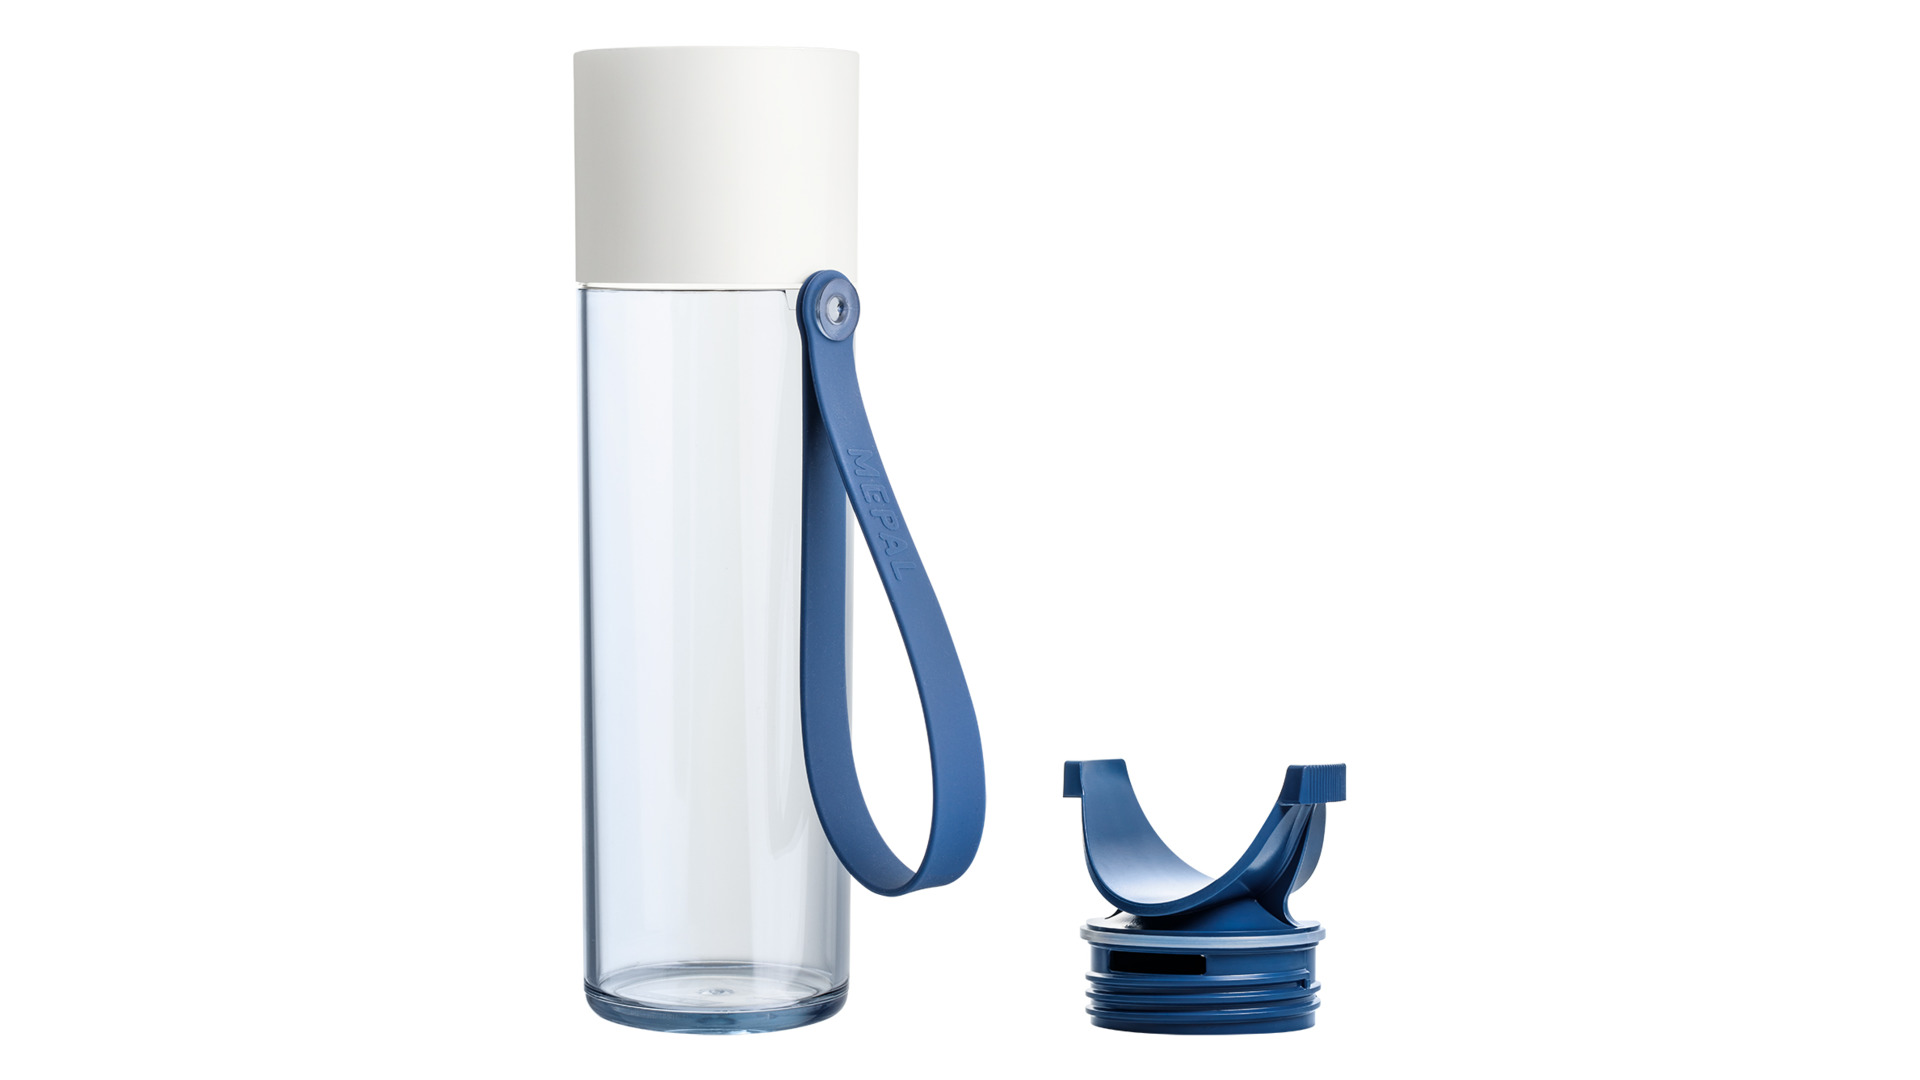 Бутылка для воды Mepal 500 мл, темно-синяя